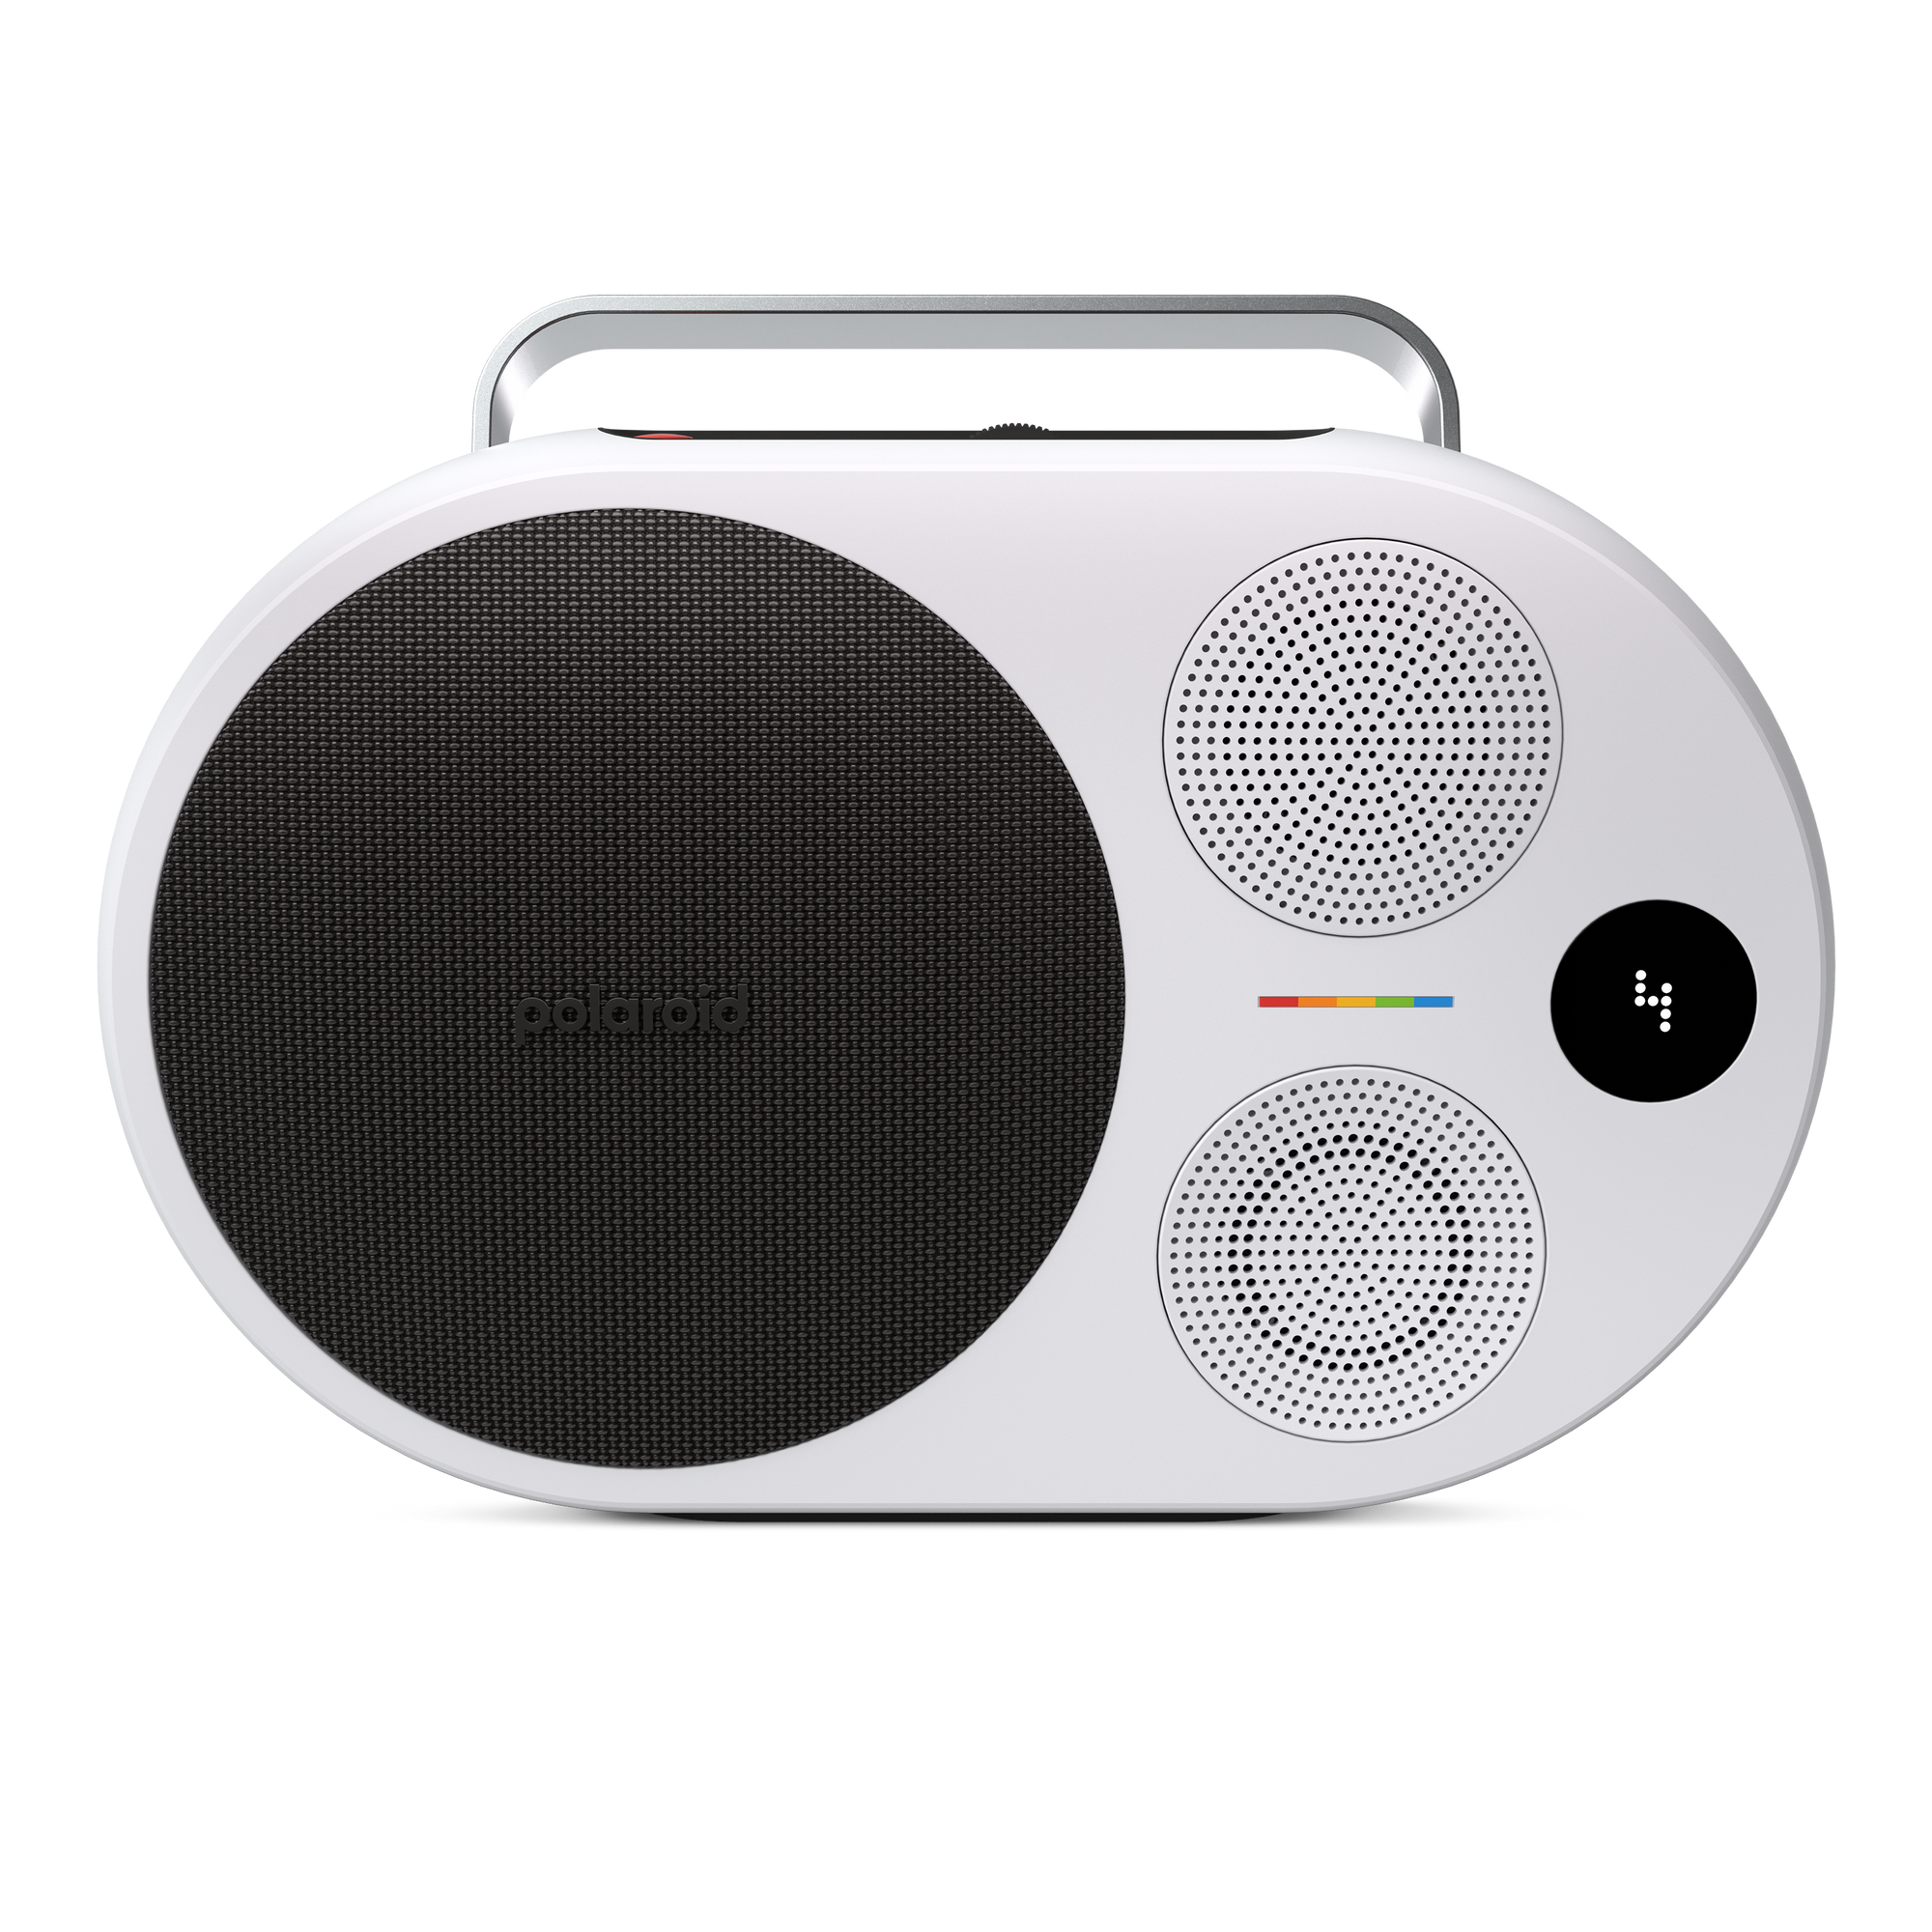 POLAROID P4 Music Player Bluetooth Wireless Portable Speaker - Black & White